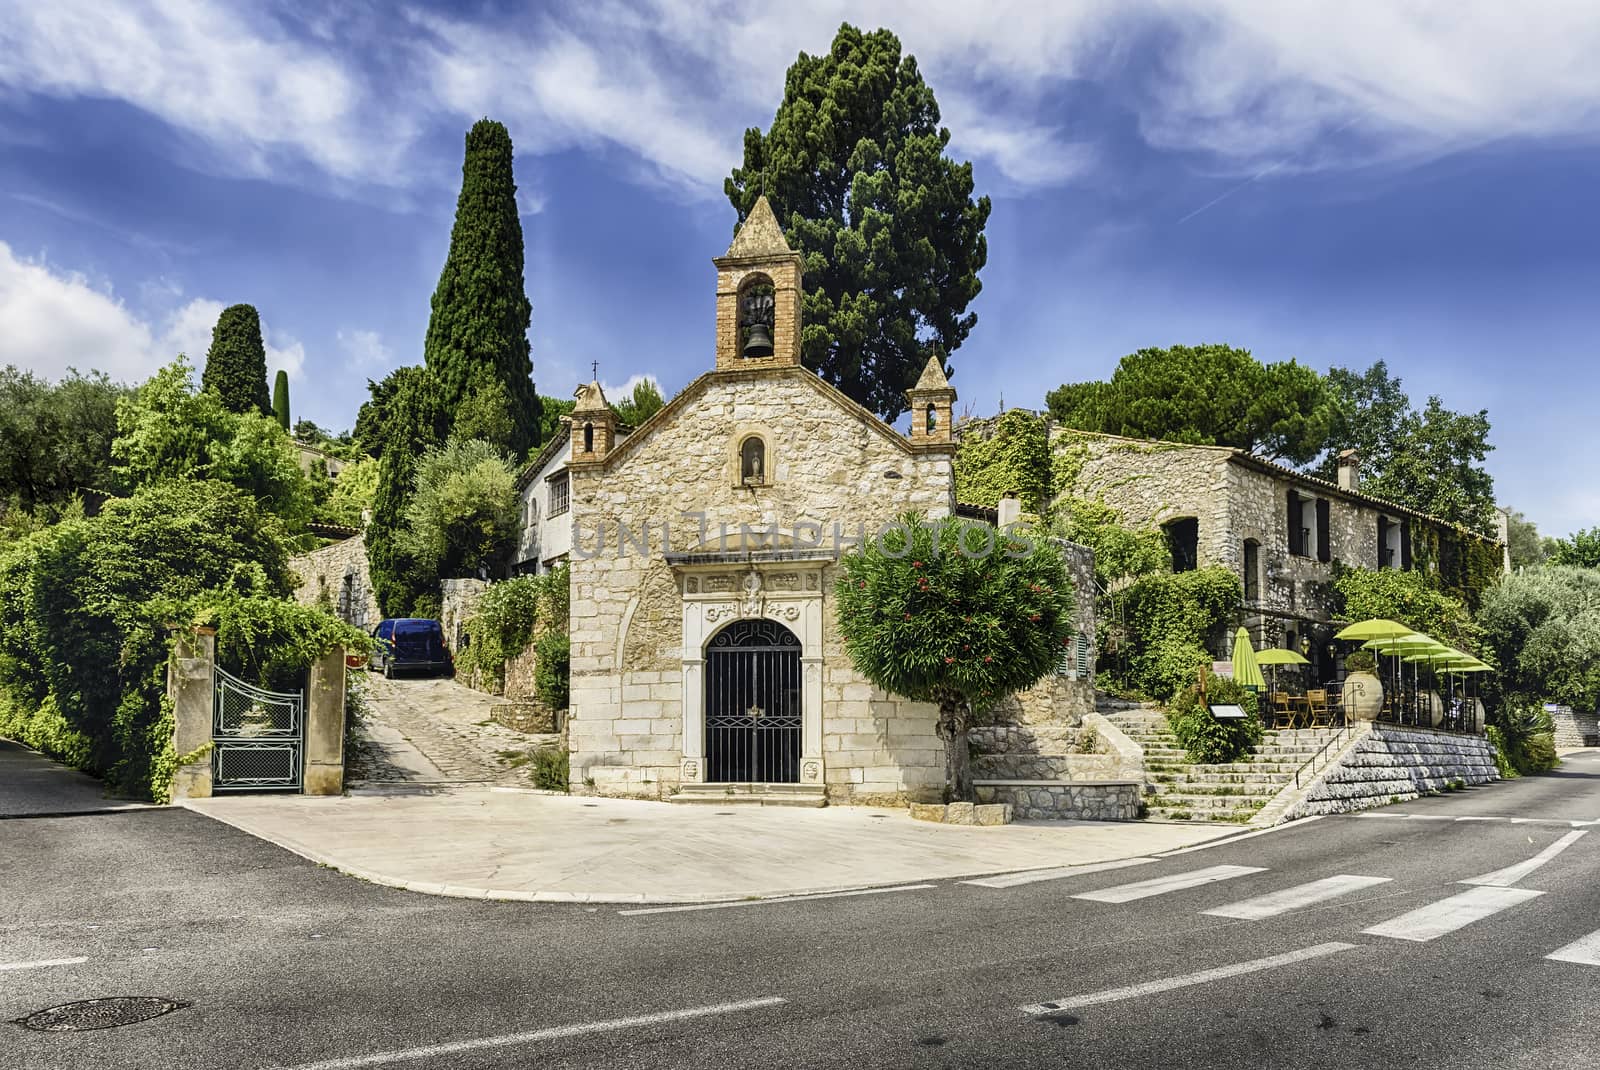 Picturesque church in Saint-Paul-de-Vence, Cote d'Azur, France by marcorubino